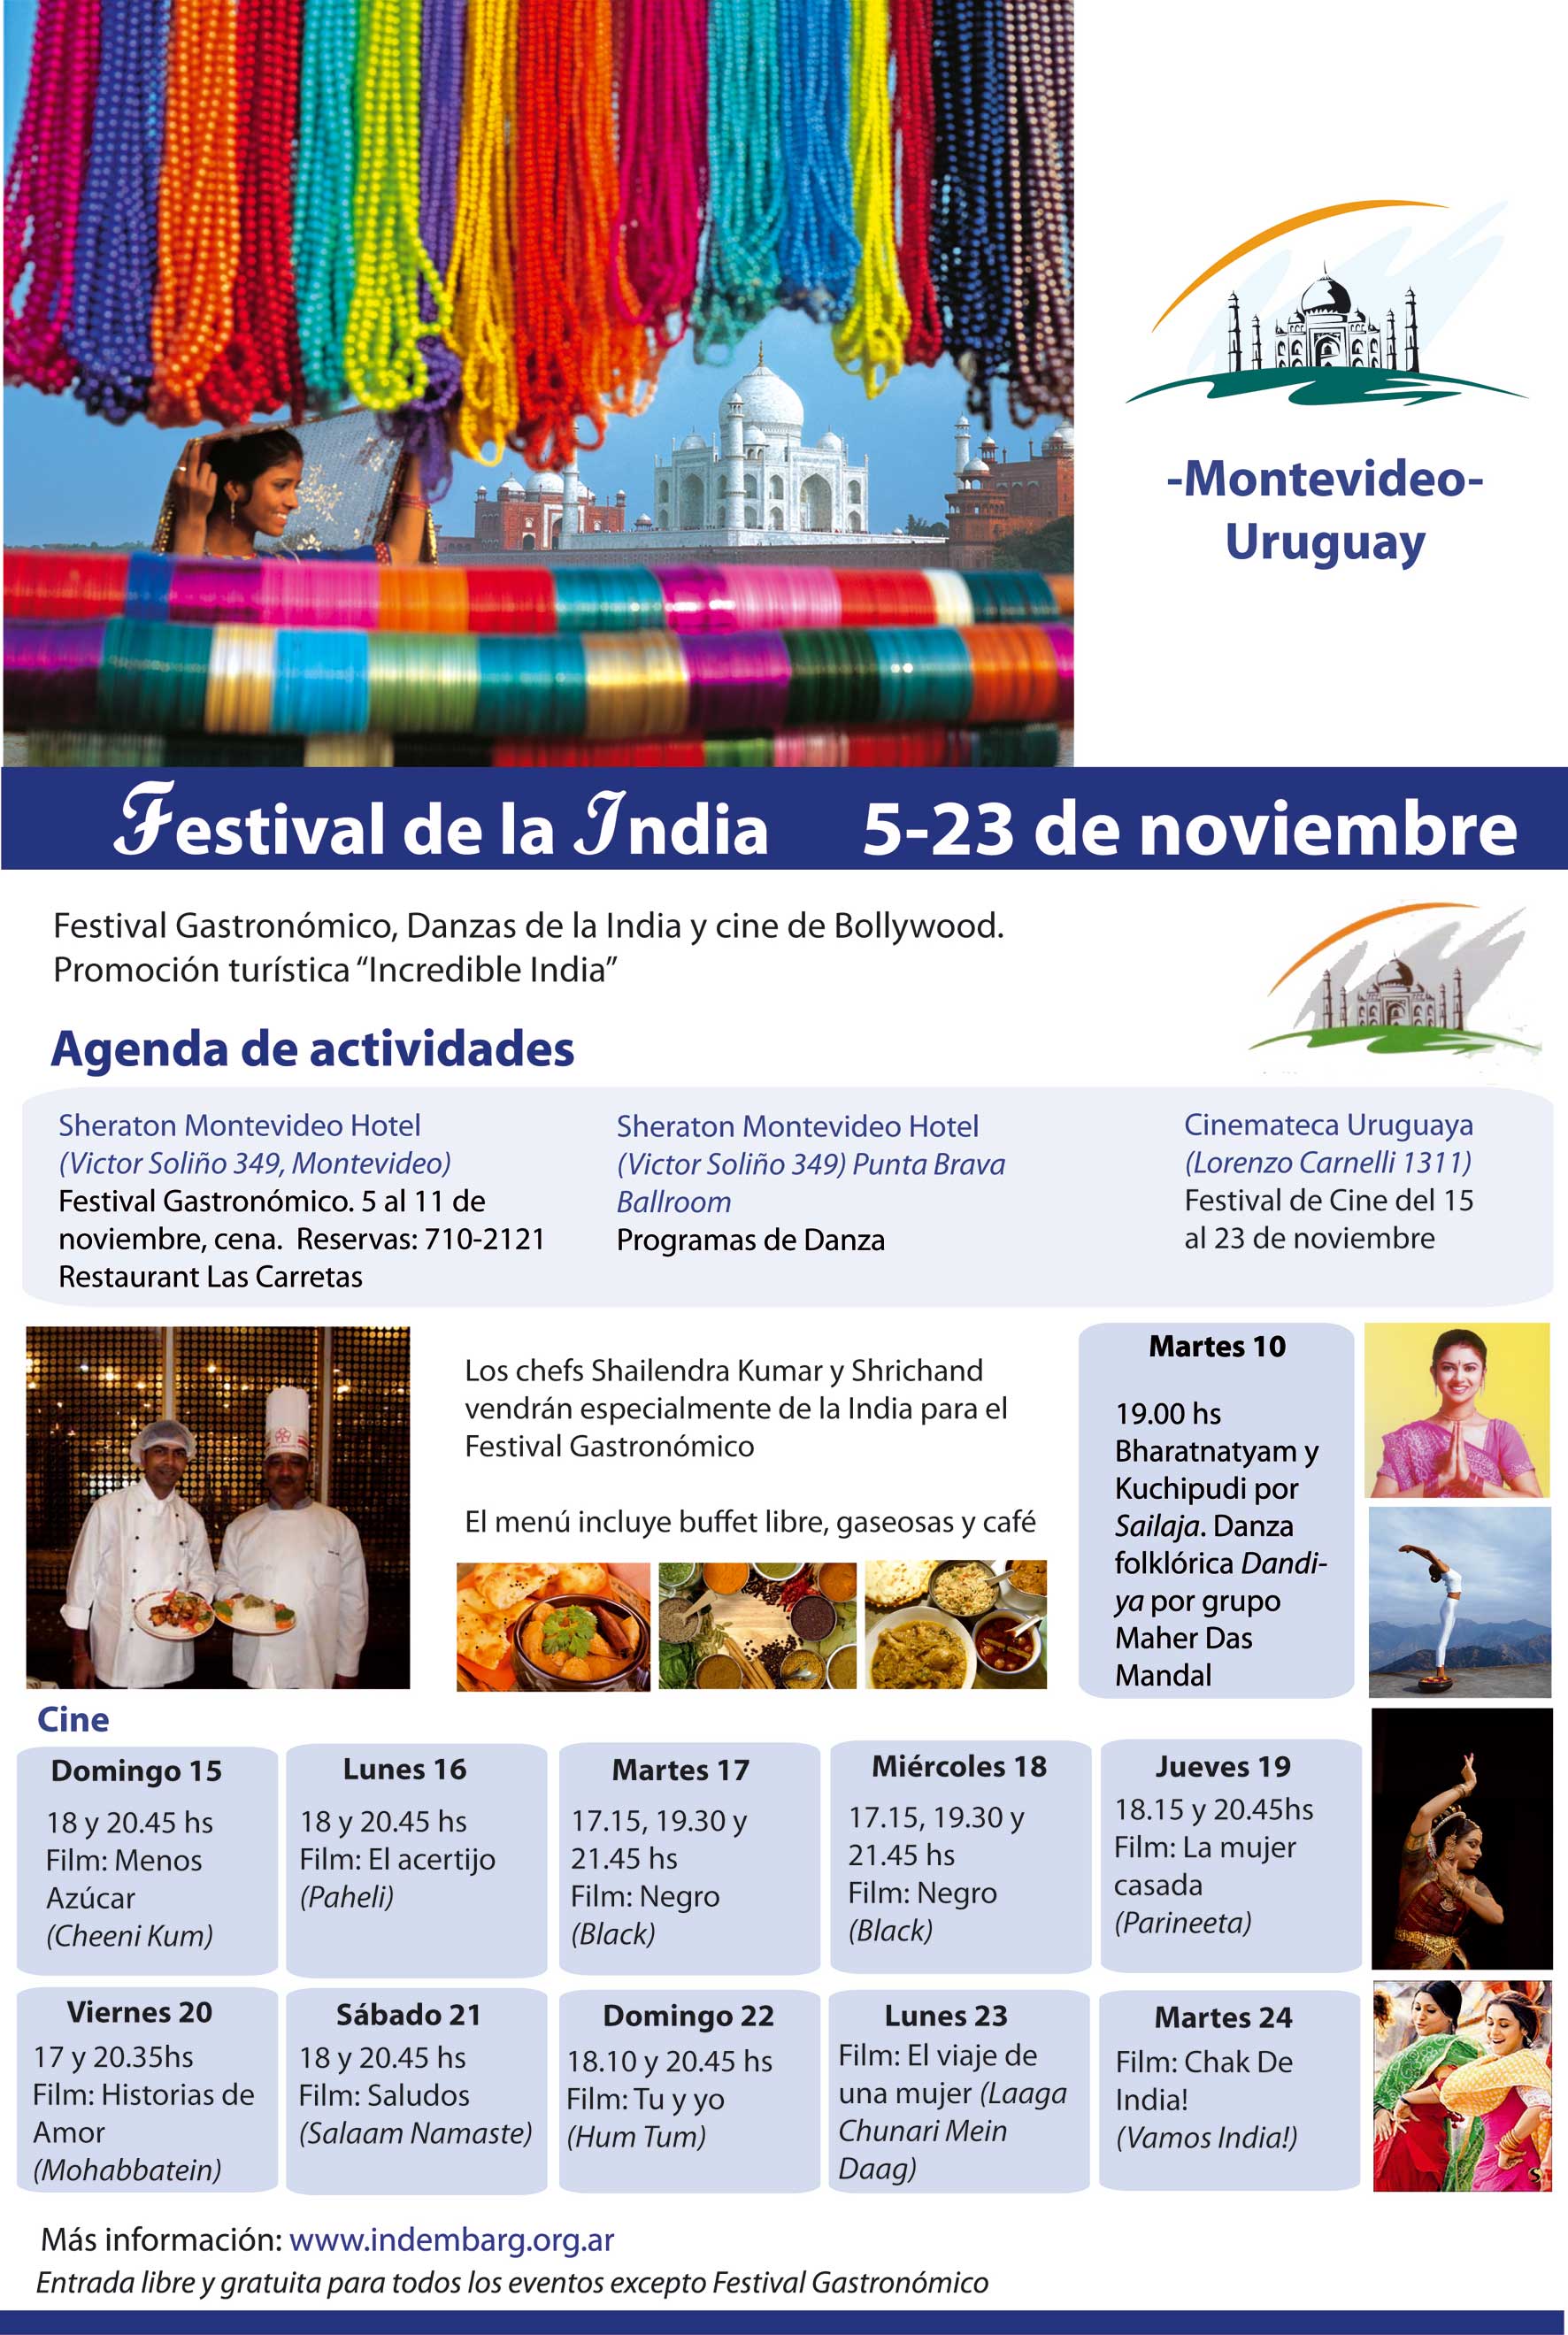 Festival of India in Uruguay